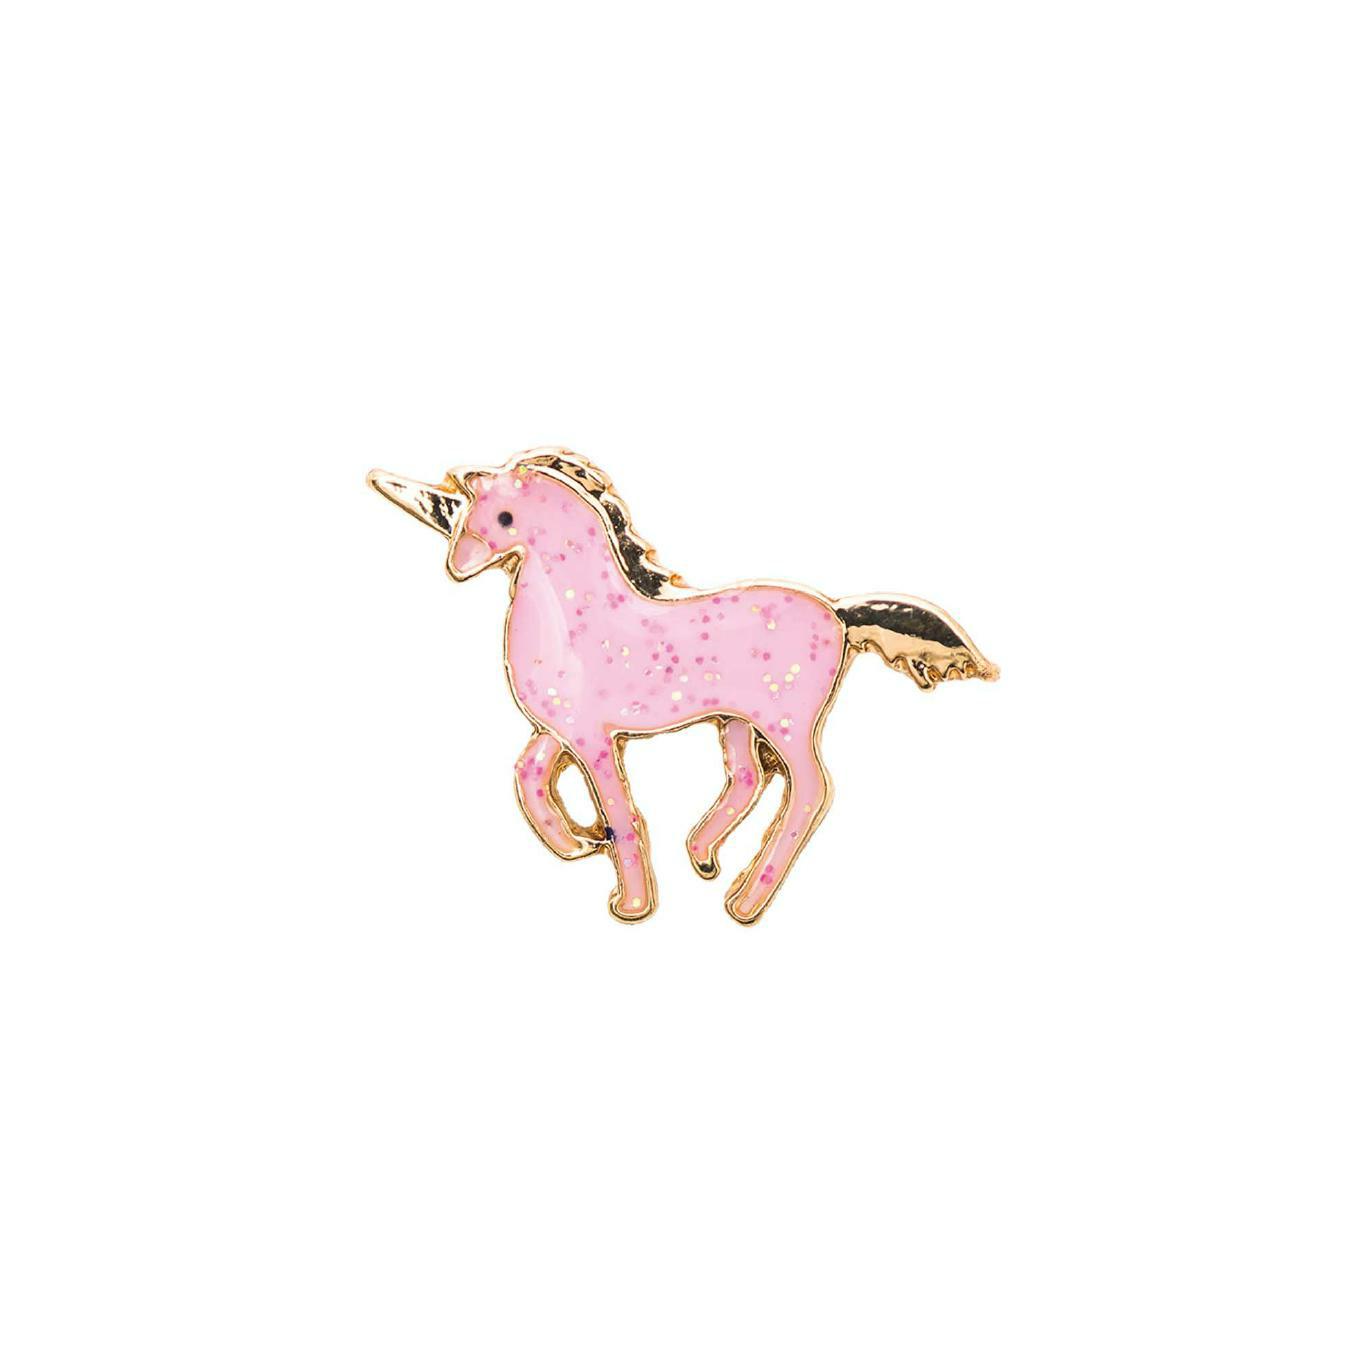 rico - Emailbrosche/Pin - "Pink Unicorn" - 18x14mm